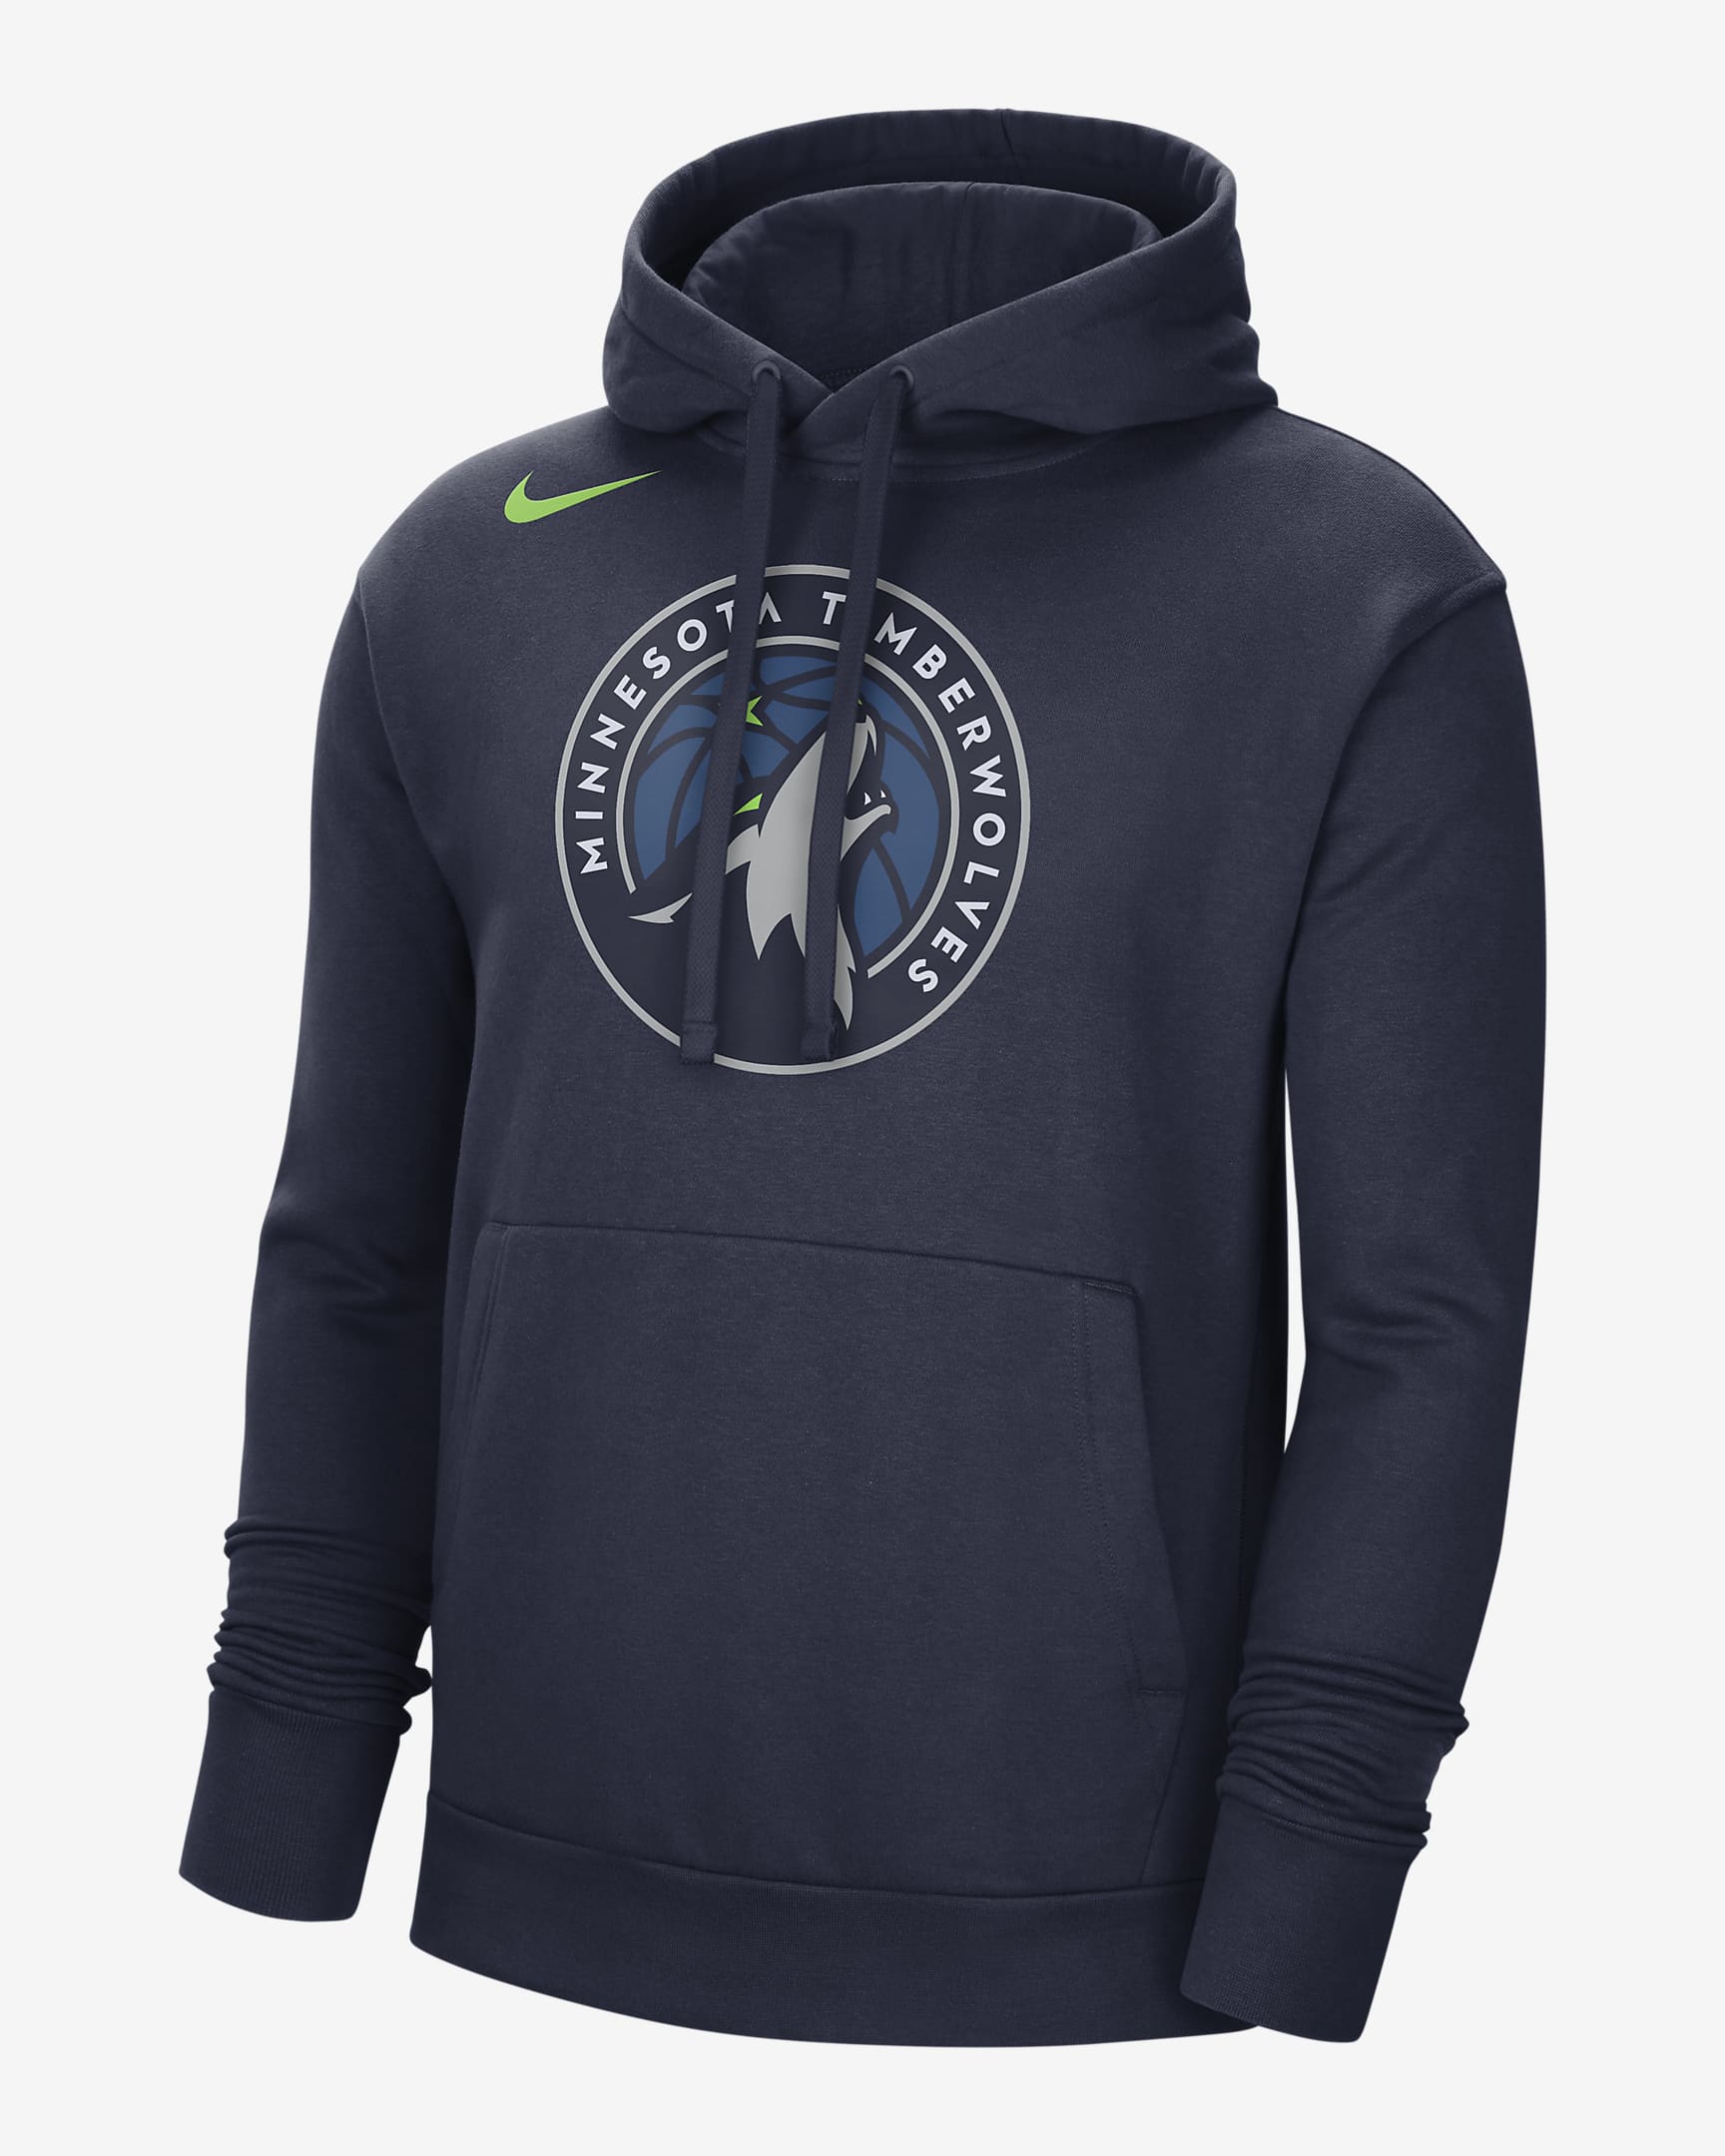 Minnesota Timberwolves Men's Nike NBA Fleece Pullover Hoodie